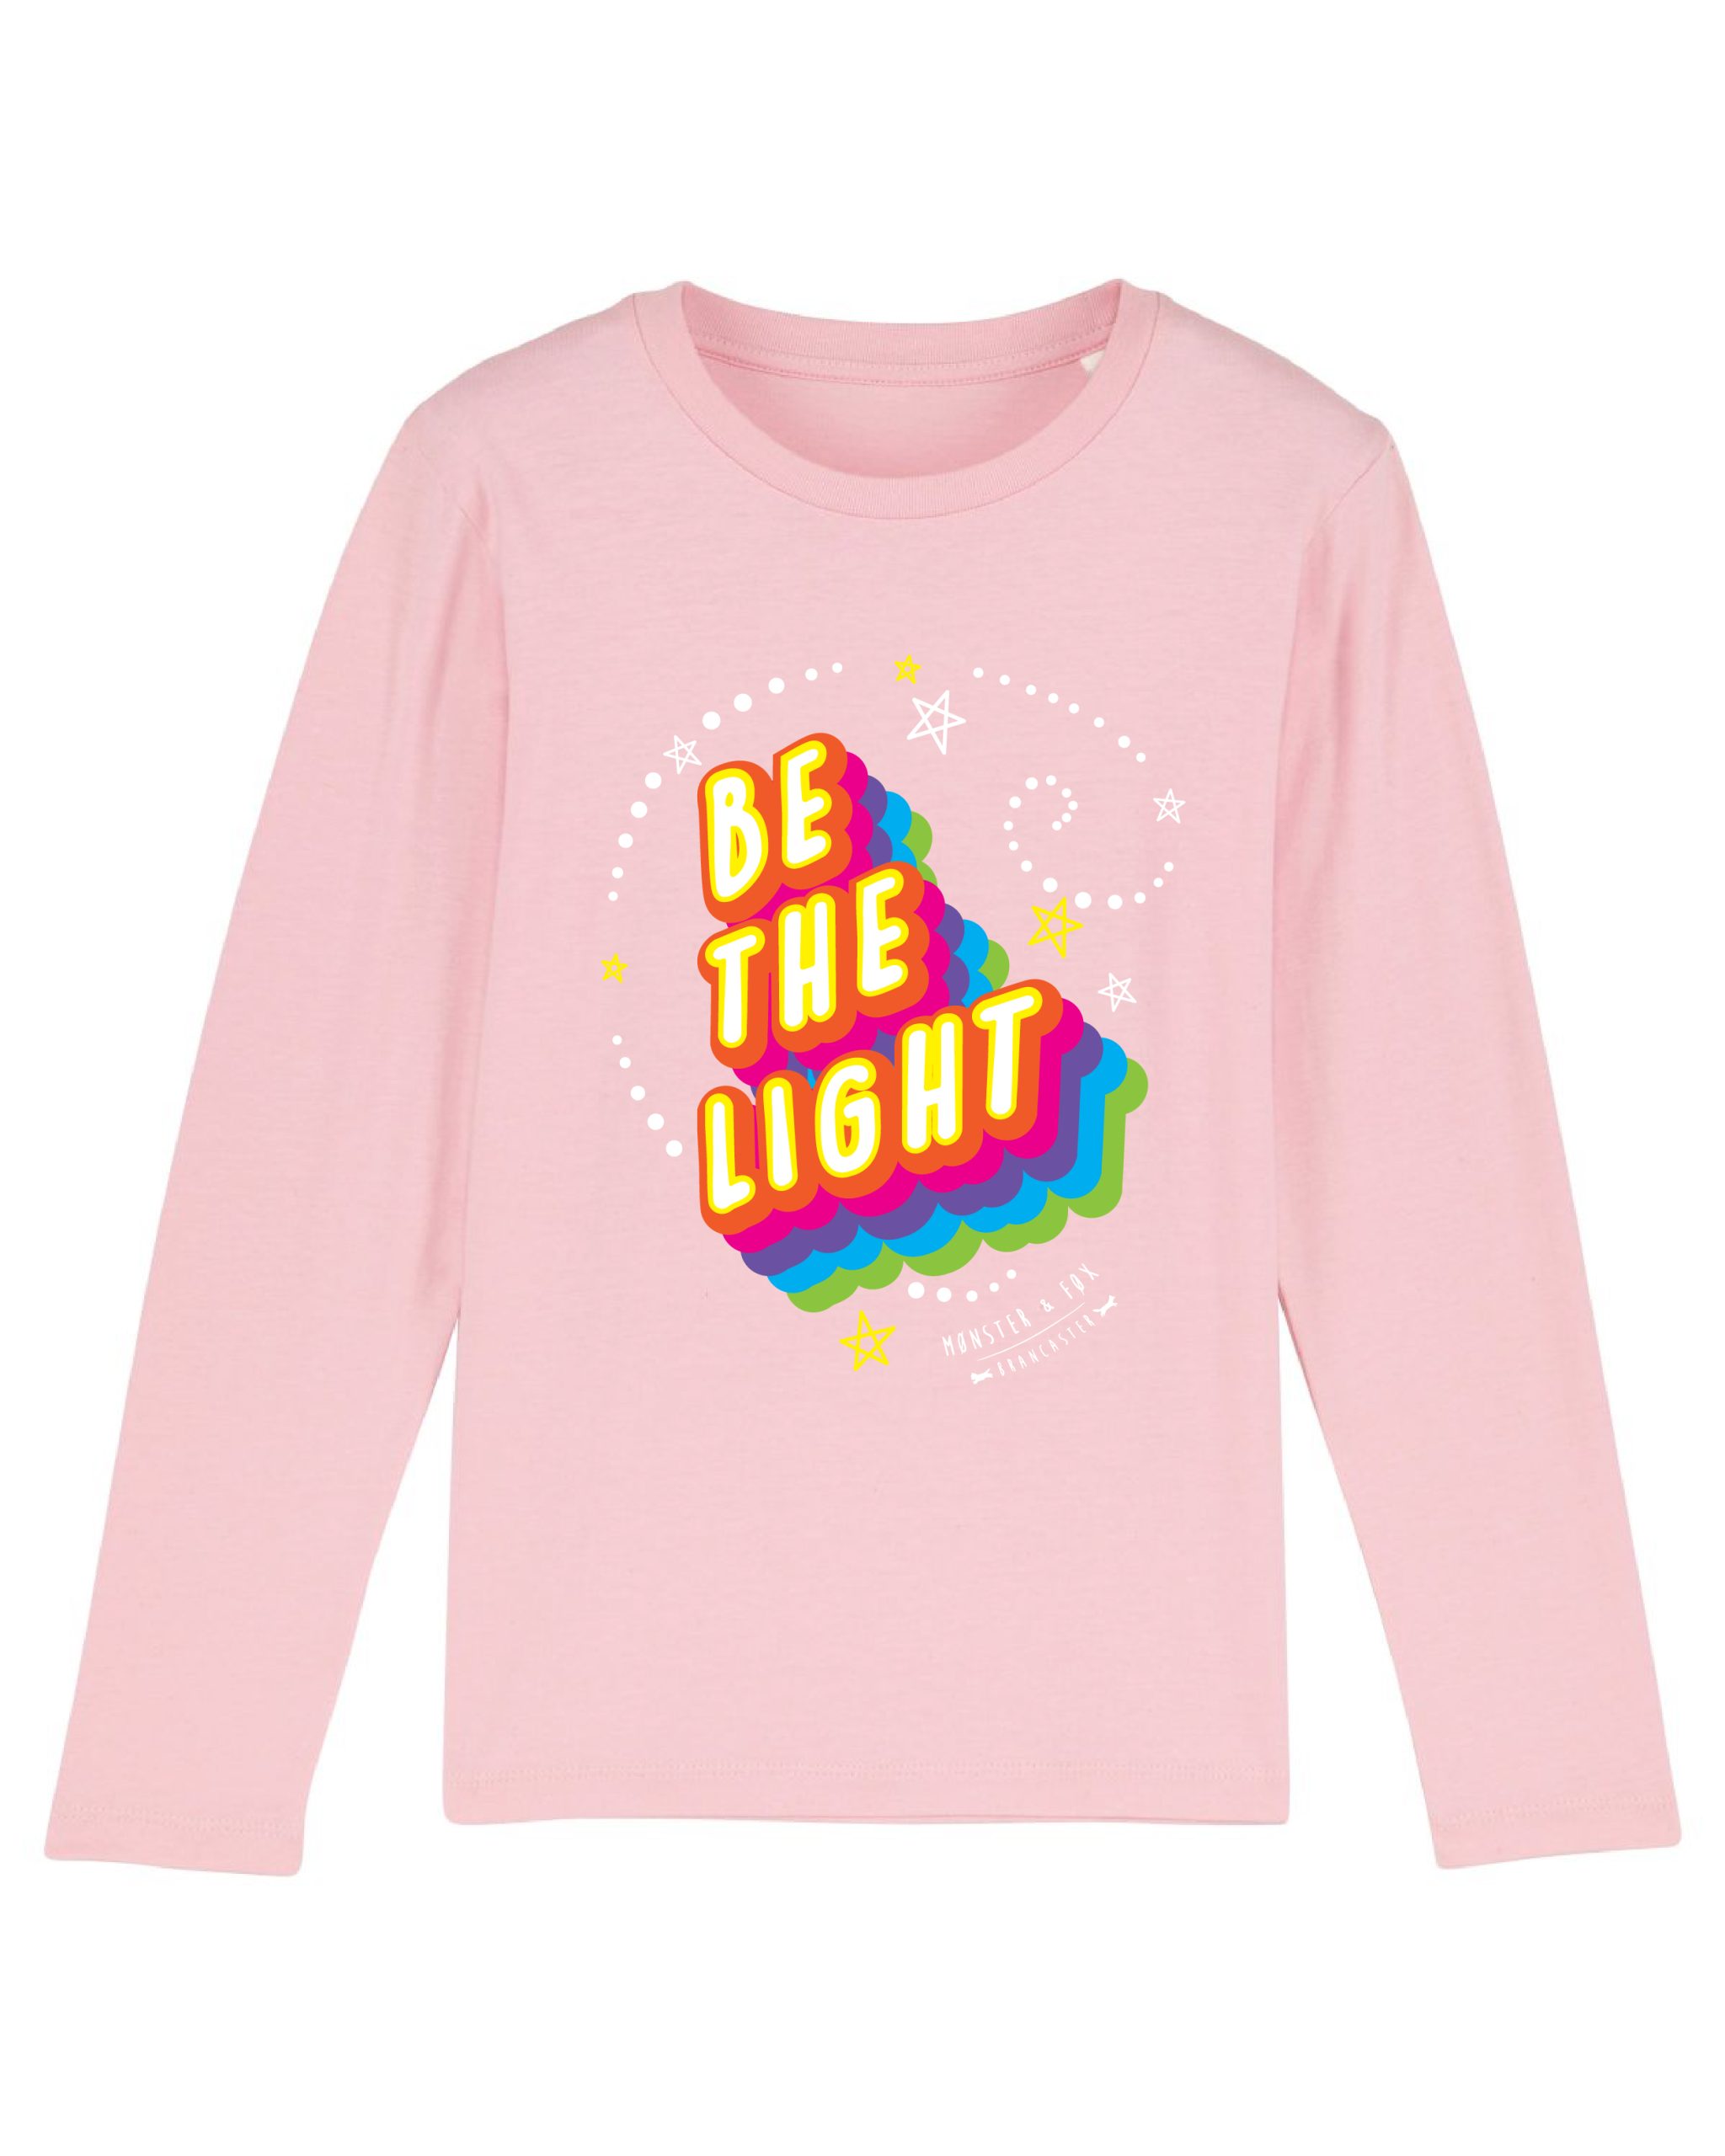 Neon Slouchy Sweatshirt Hot Pink fit 18" American Girl Doll